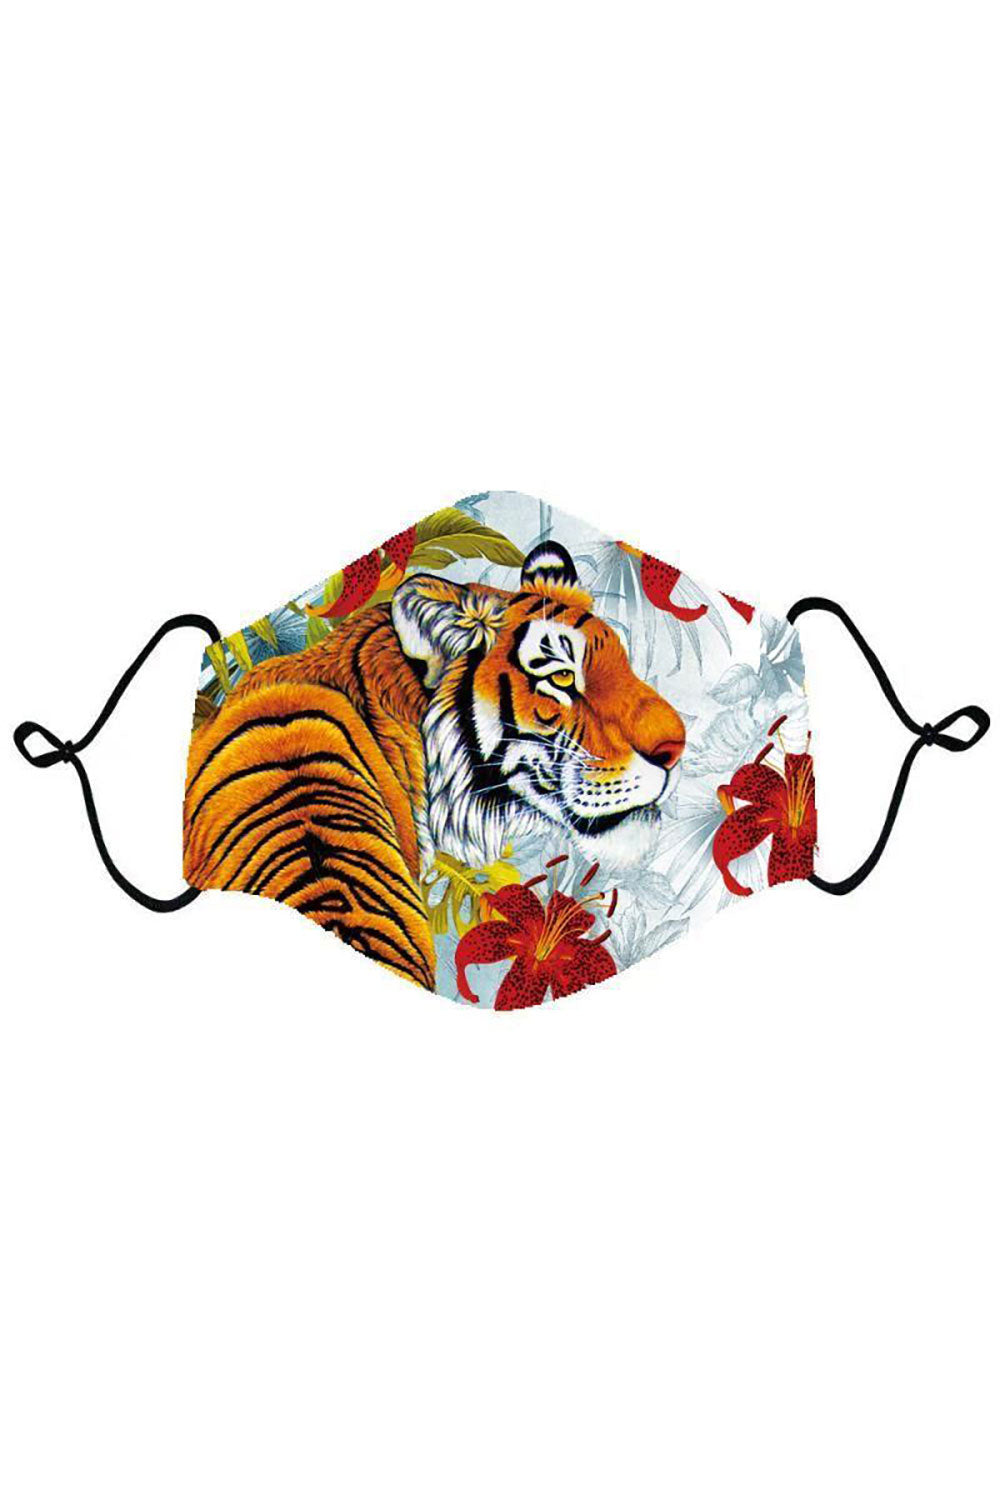 BARABAS Men Mask Wild Roar Mask MSP203-MUL Multi Color 